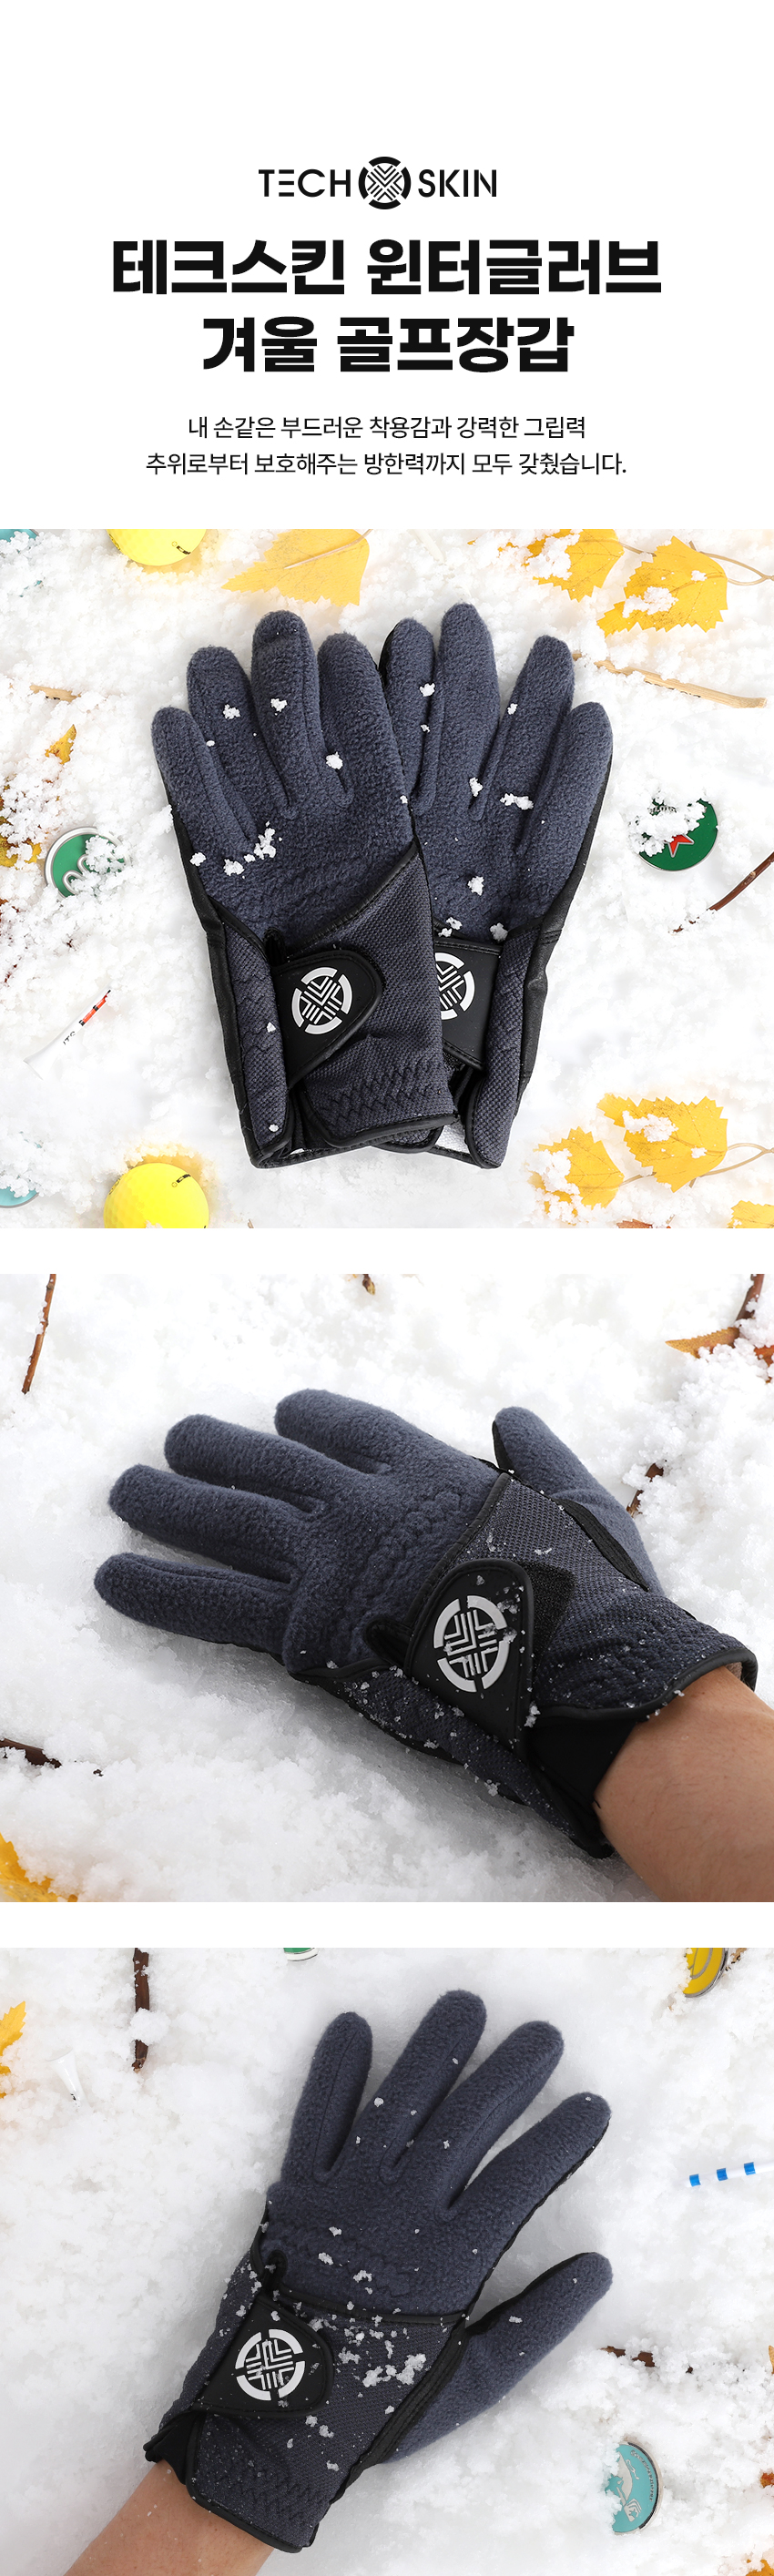 winter_glove16.jpg